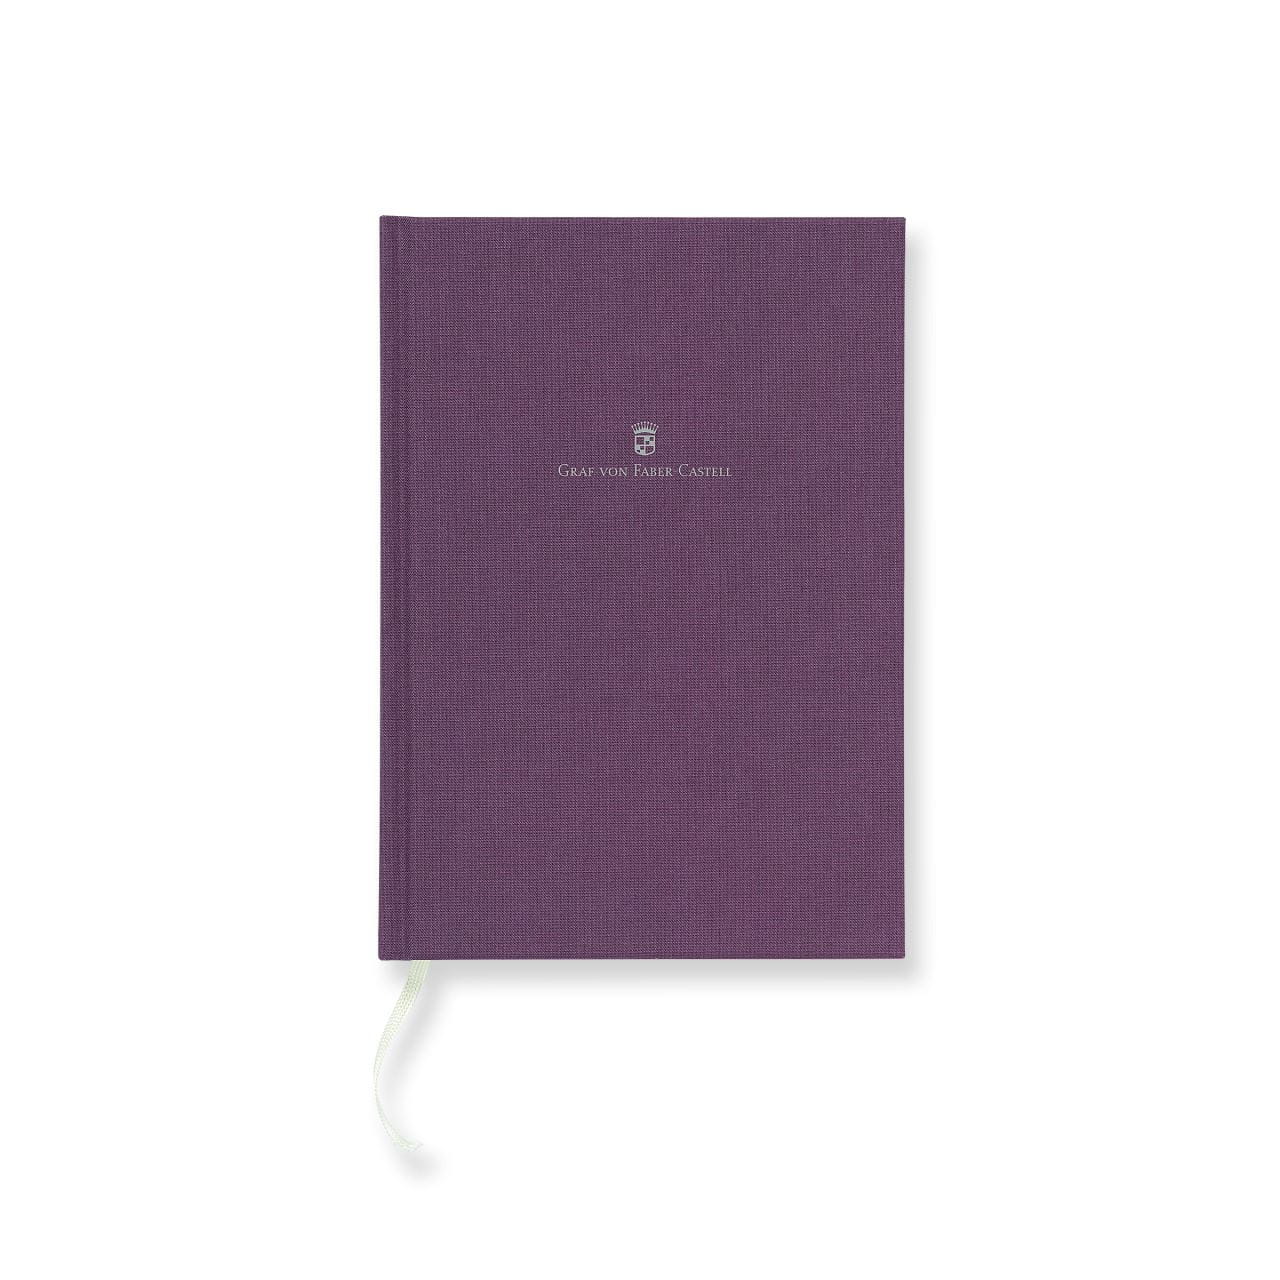 Graf-von-Faber-Castell - Notebook with linen cover A5 Violet Blue